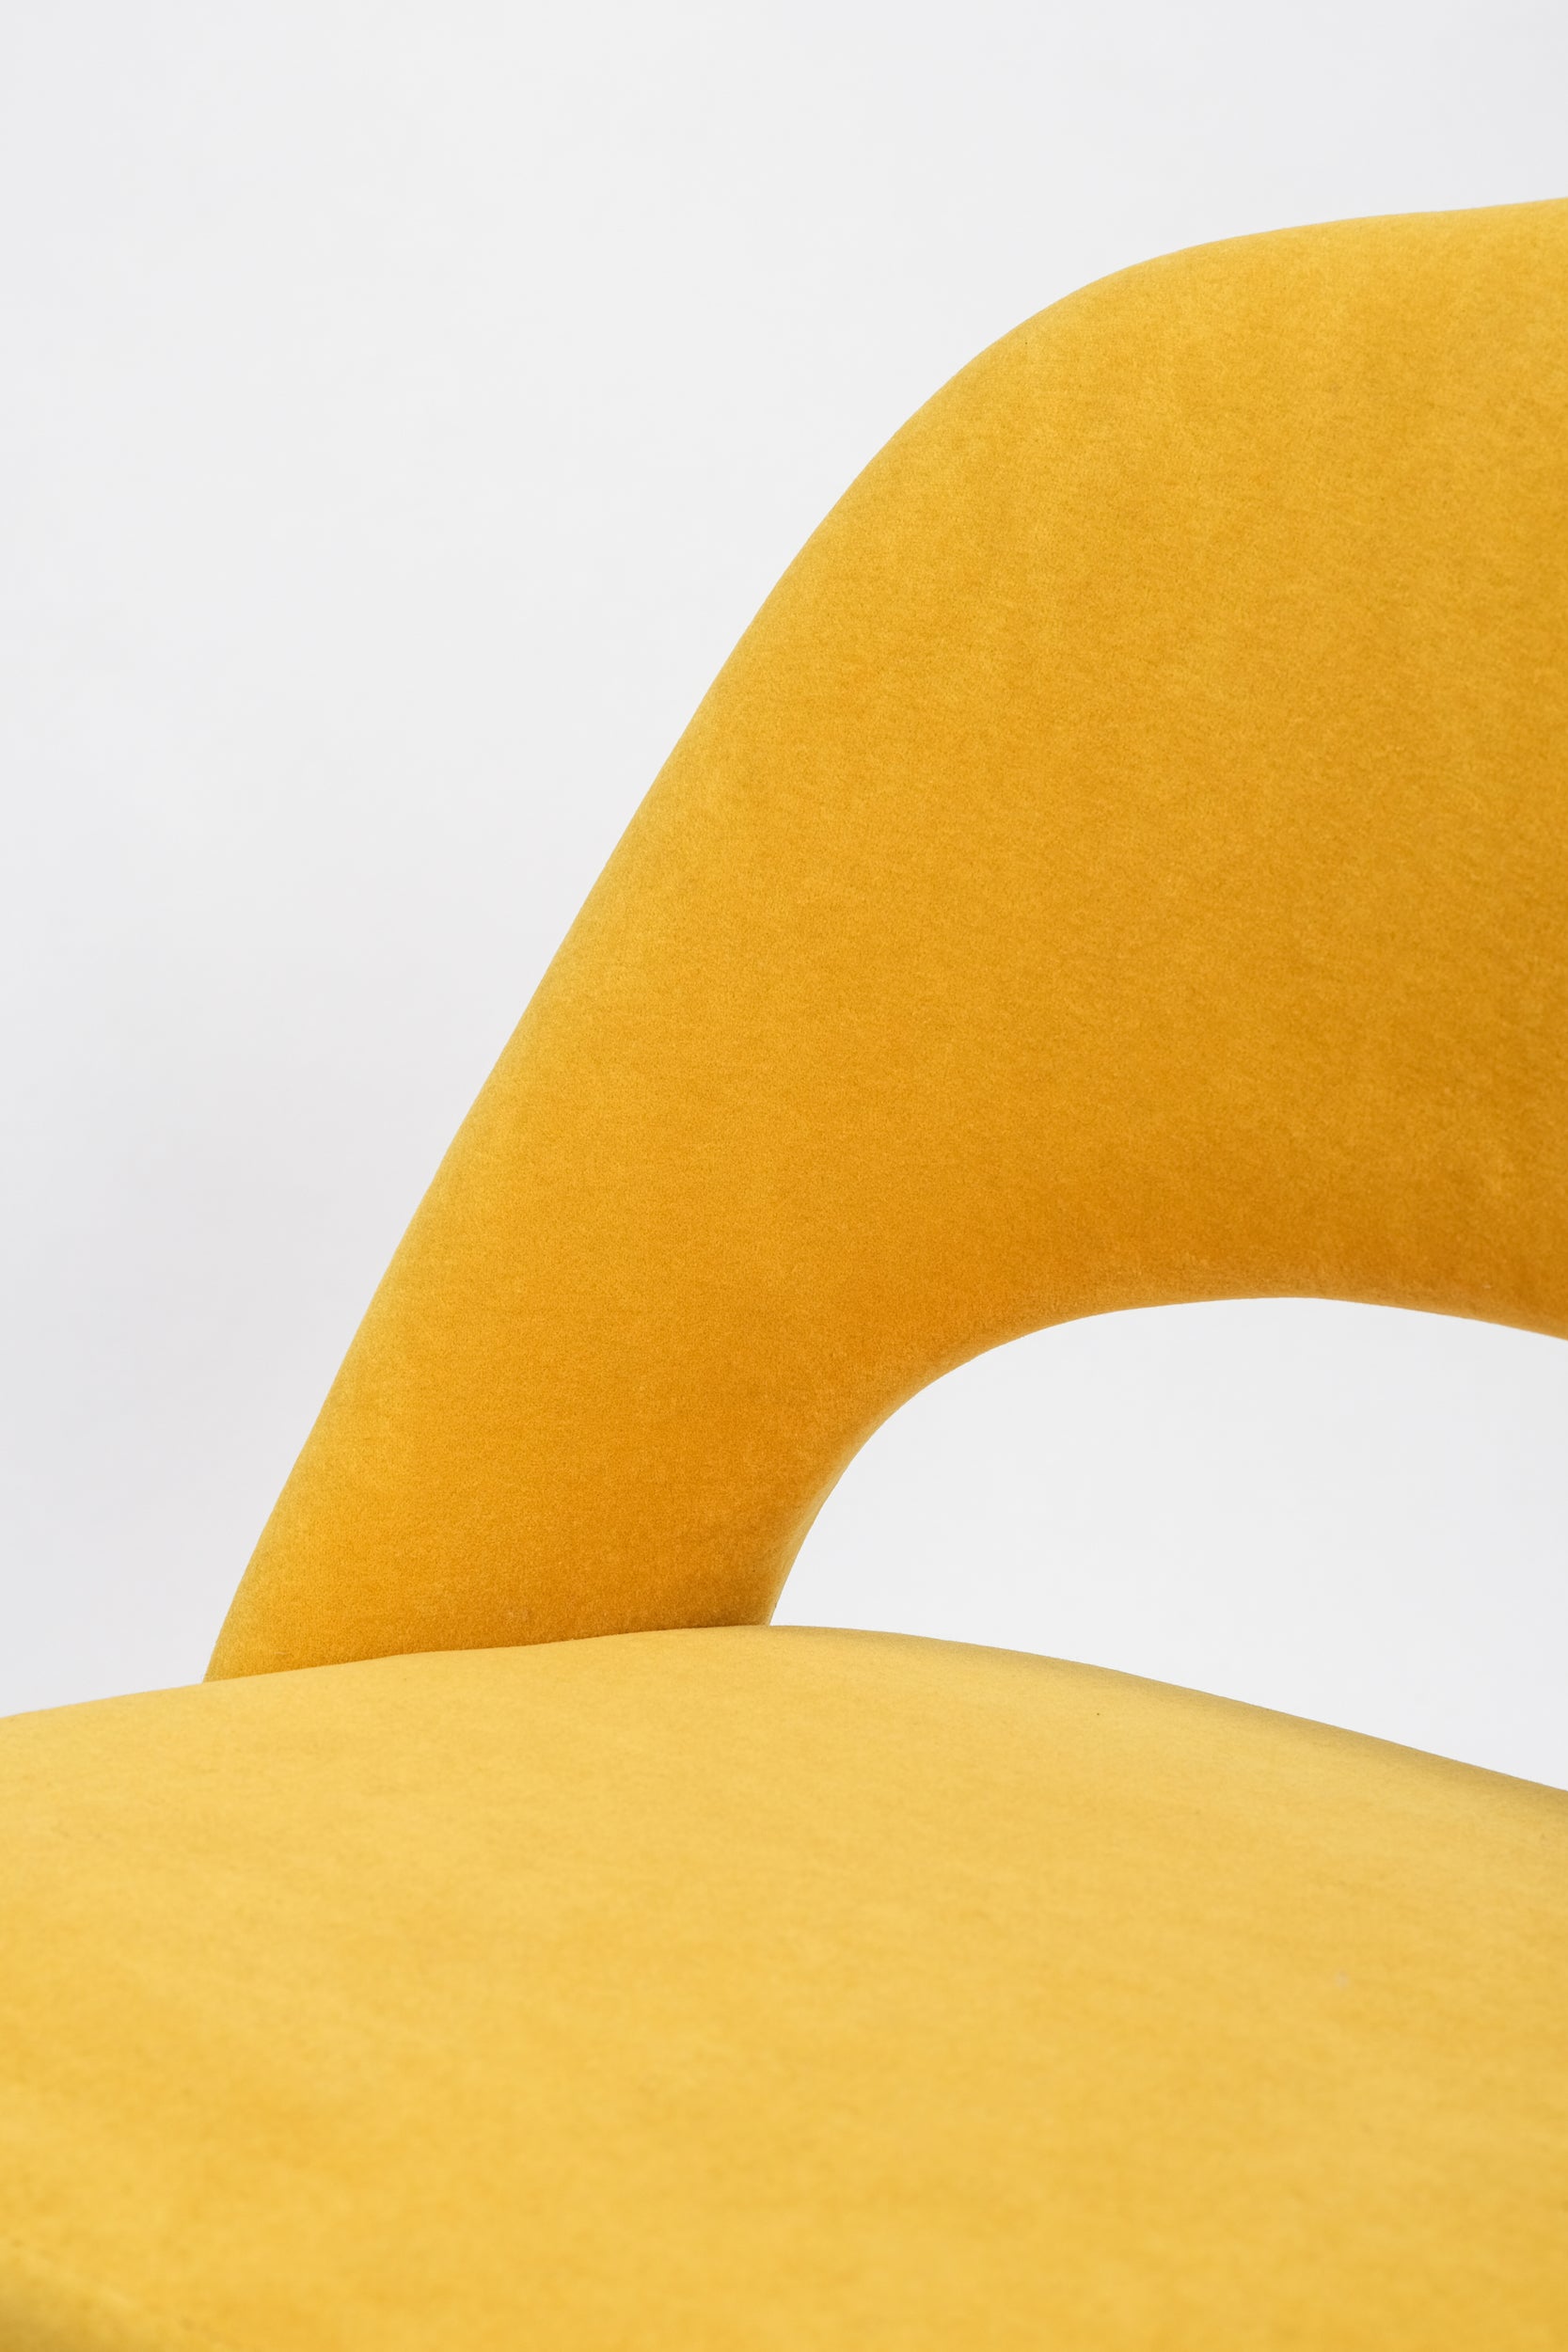 Eero Saarinen chair, model 72, Knoll Int., 50s